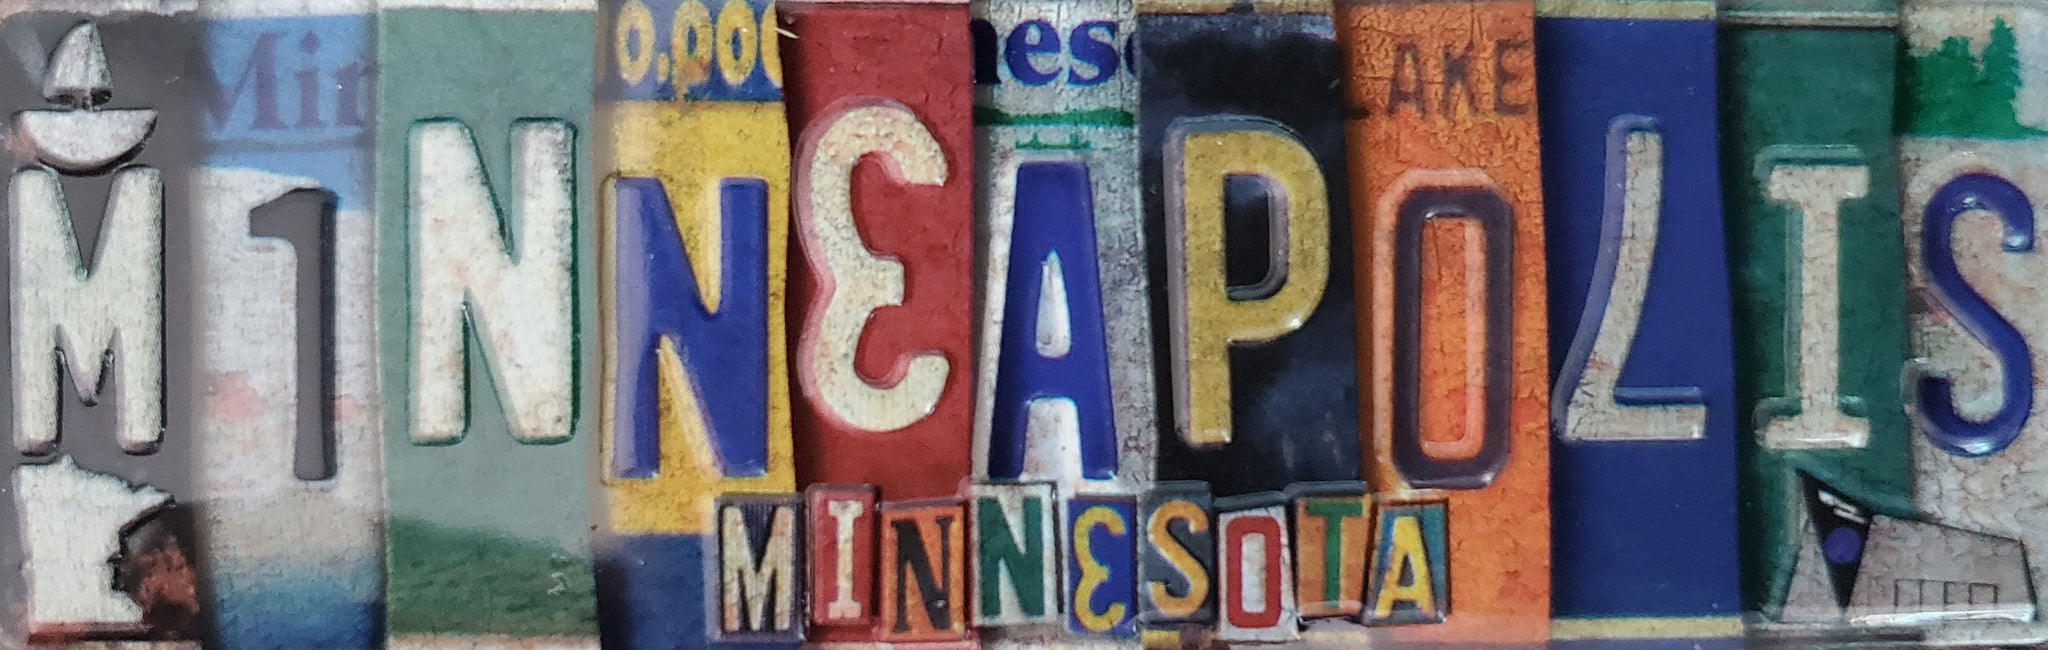 Minneapolis MN License Plate - Magnet